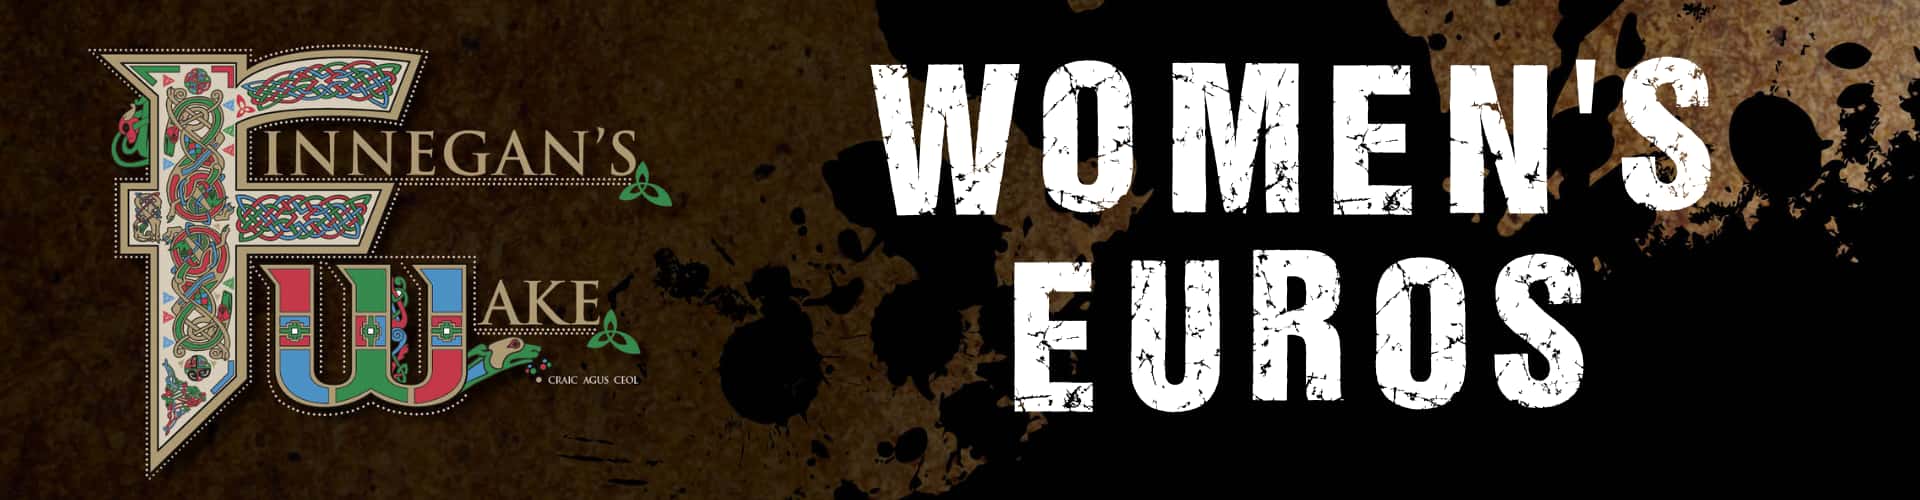 Watch the Women's EUROs at Finnegan's Wake